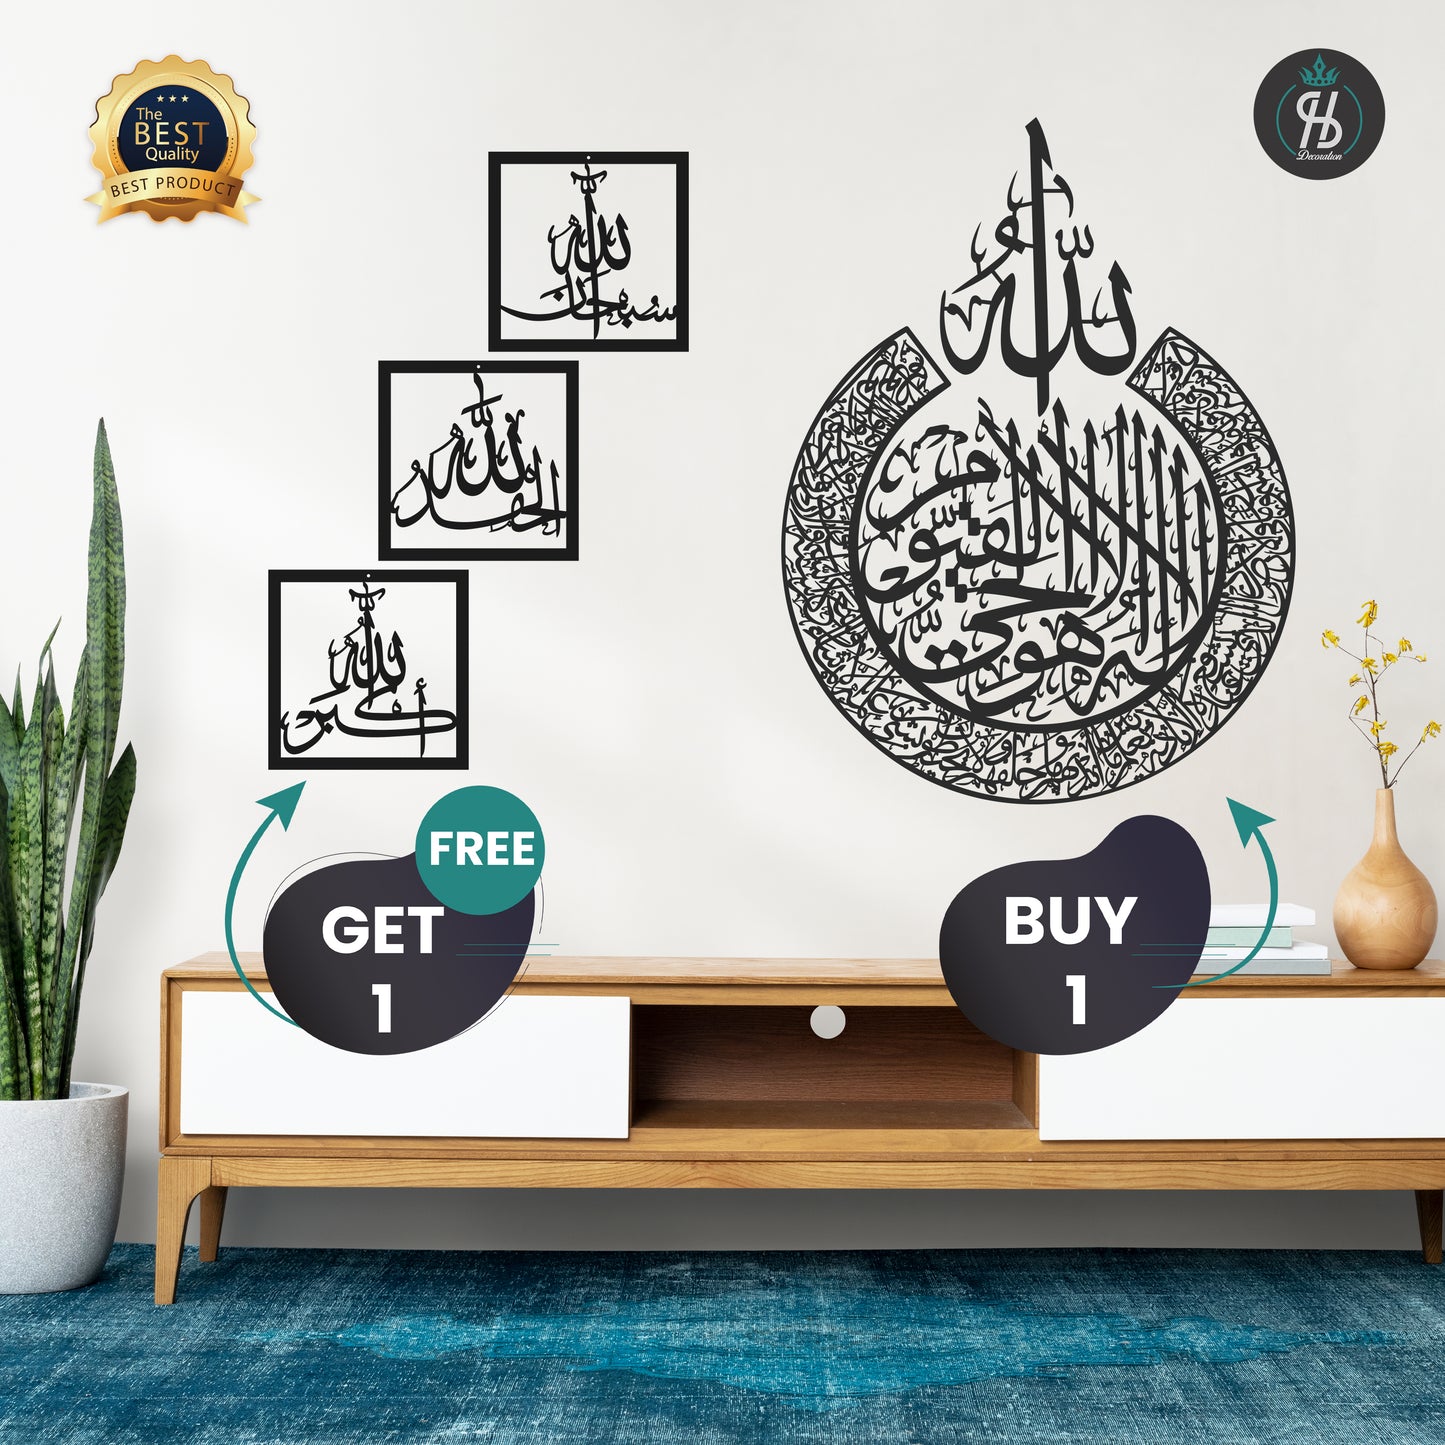 Ayatal Kursi & Tasbeeh e Fatima Square Calligraphy - Buy 1 Get 1 Free